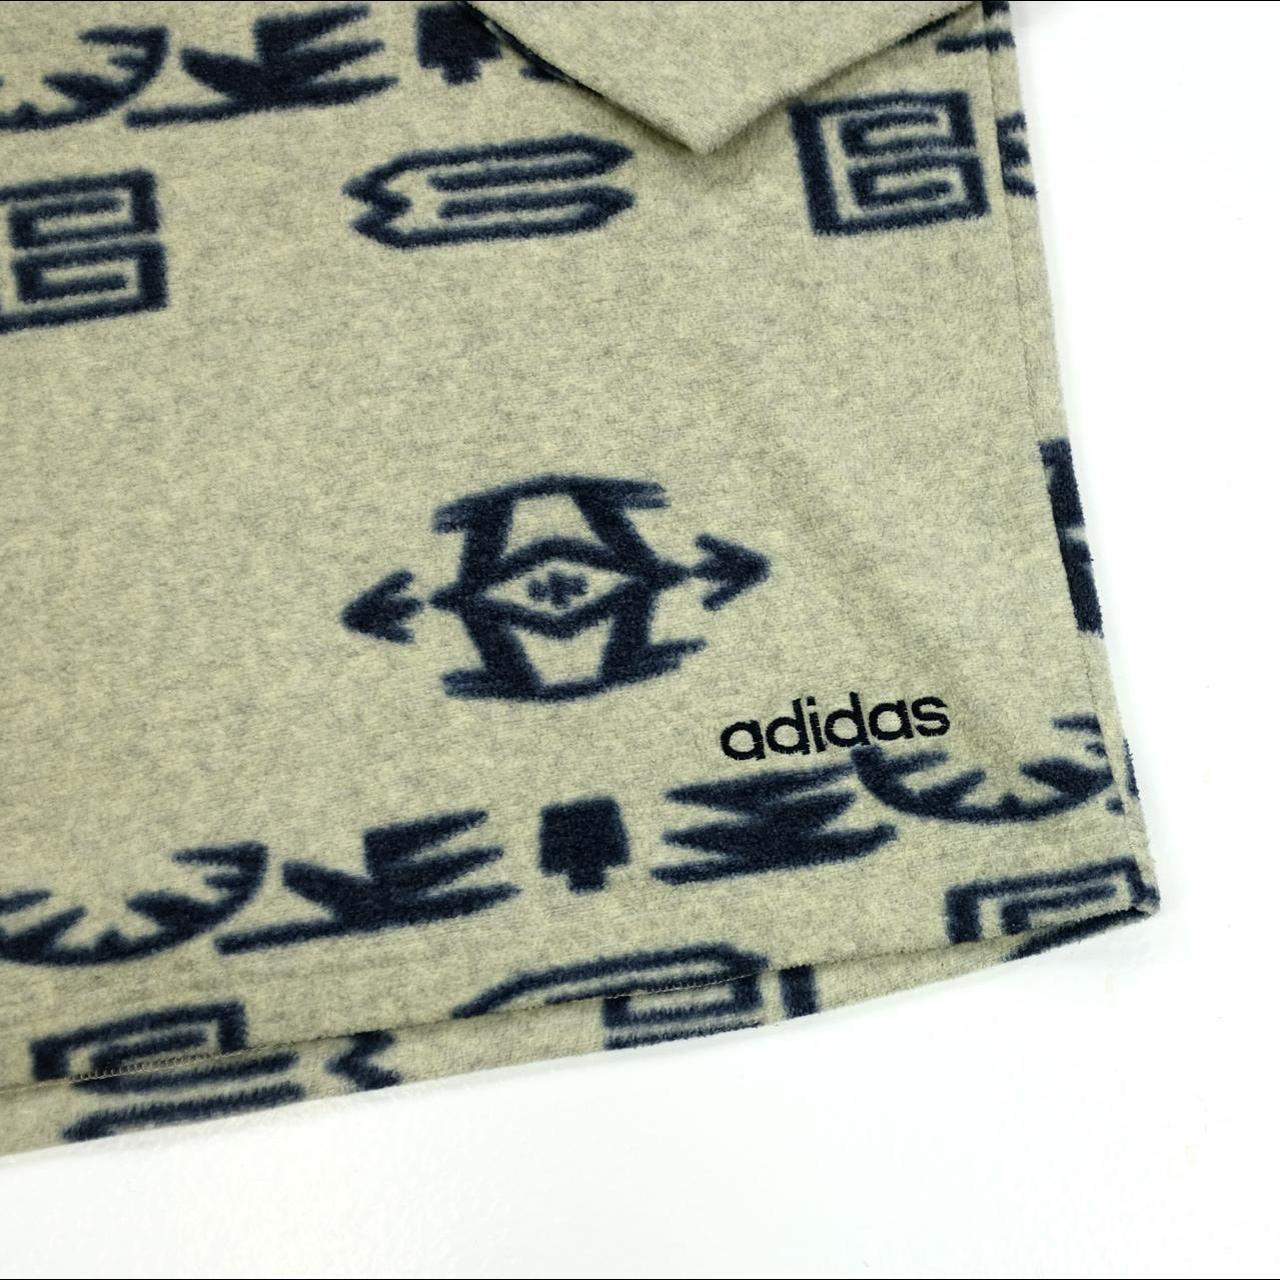 Adidas fleece jumper